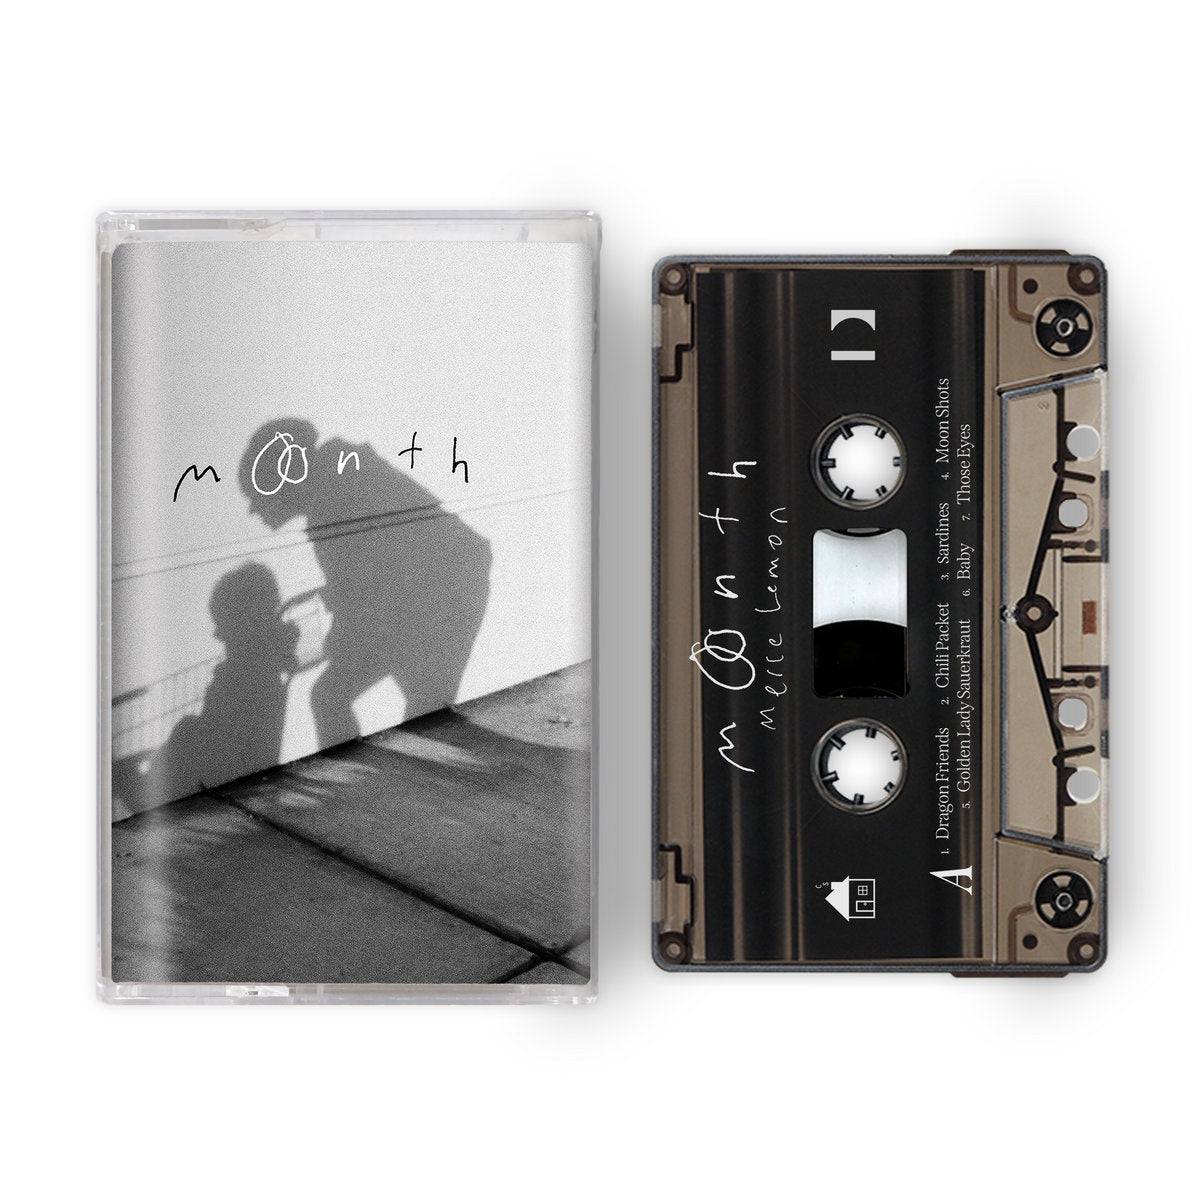 Merce Lemon - Moonth - New Cassette 2020 Darling Smokey Clear Tape - Indie Rock / Folk